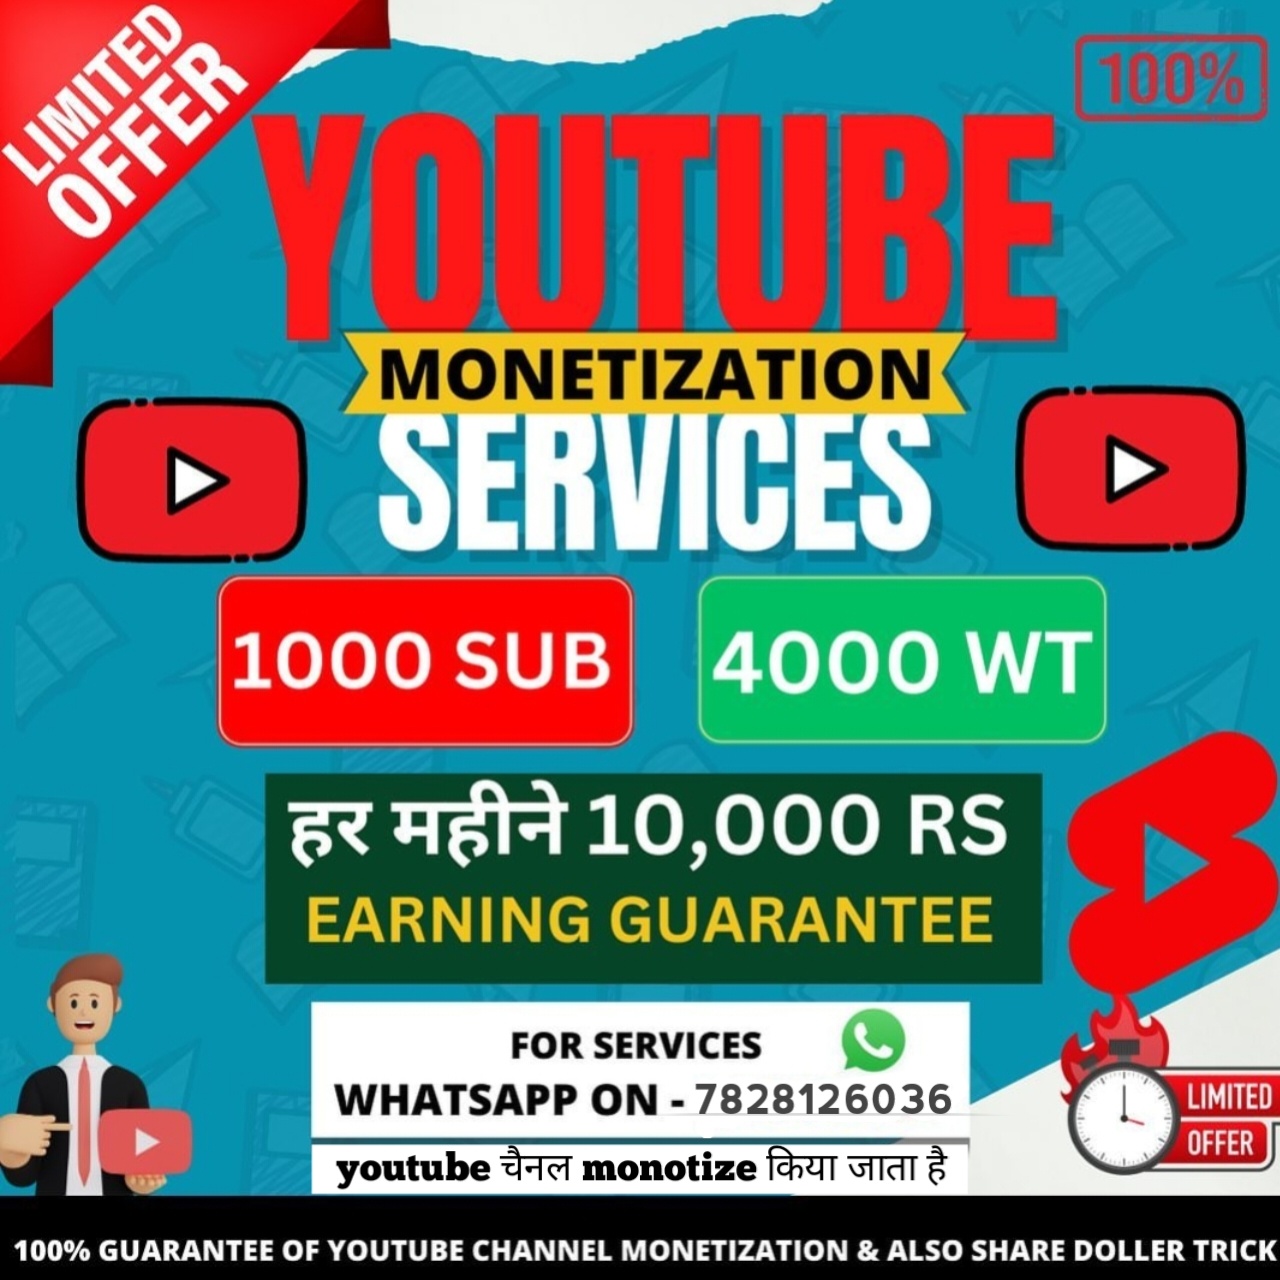 YouTube service